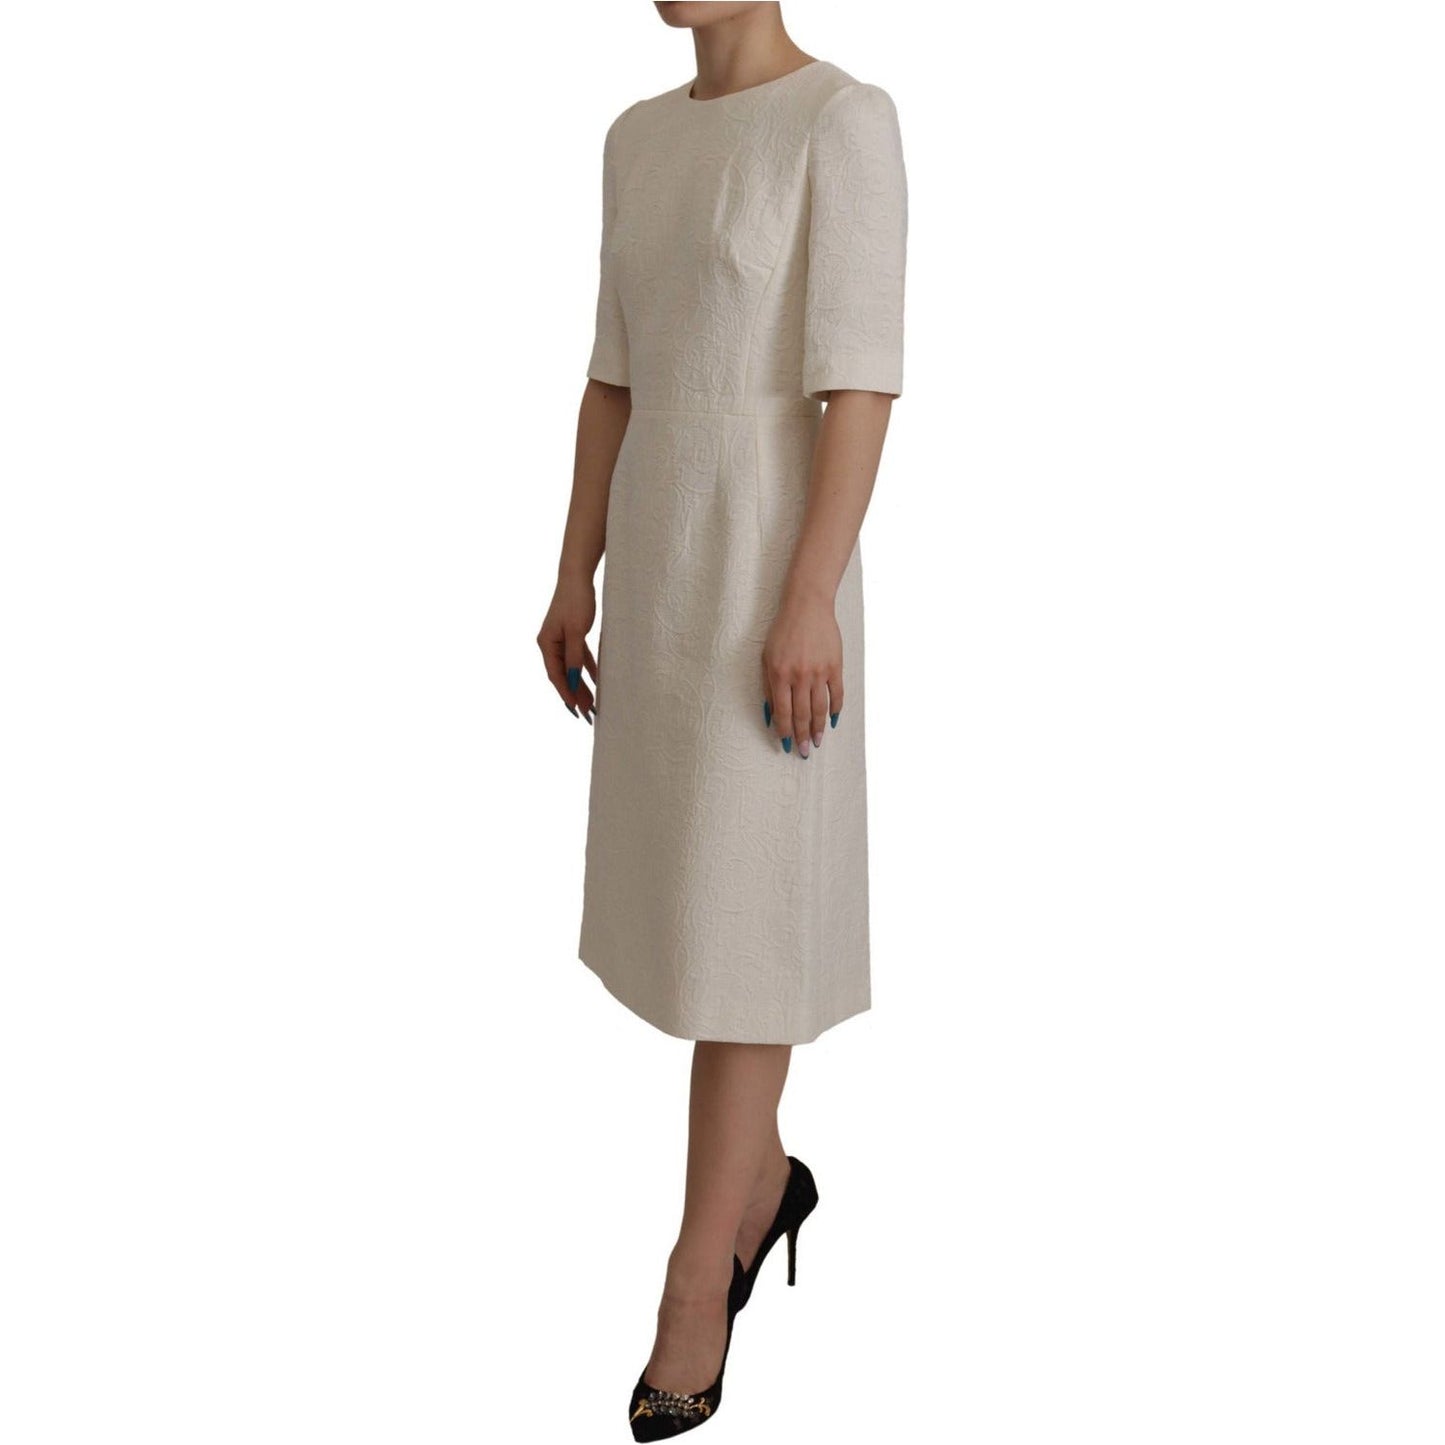 Dolce & GabbanaExquisite Jacquard Midi Dress in WhiteMcRichard Designer Brands£1099.00